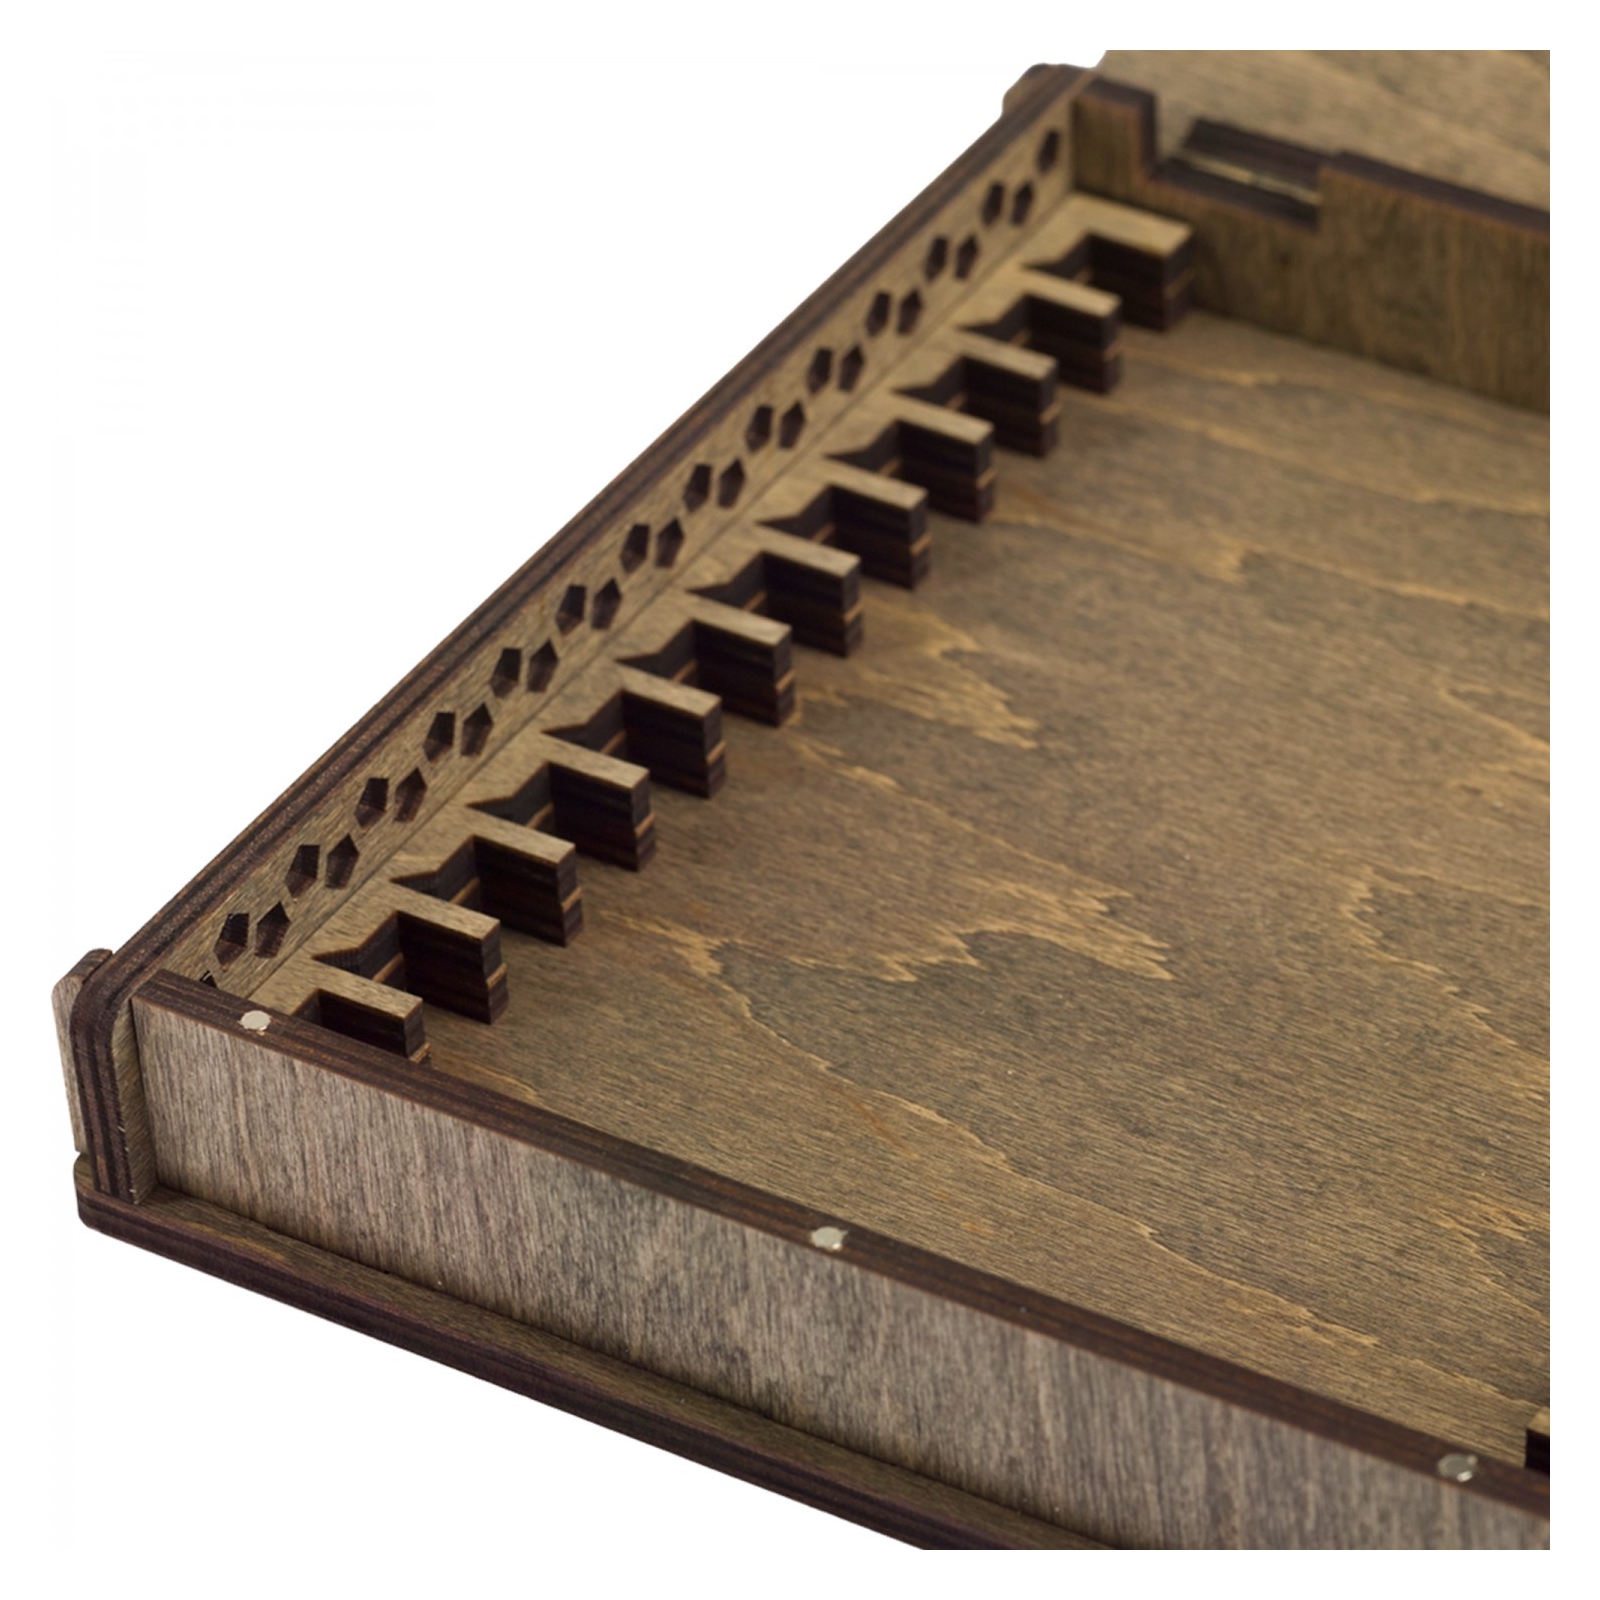 Plywood storage case for 12 stones-1500x1500.jpg